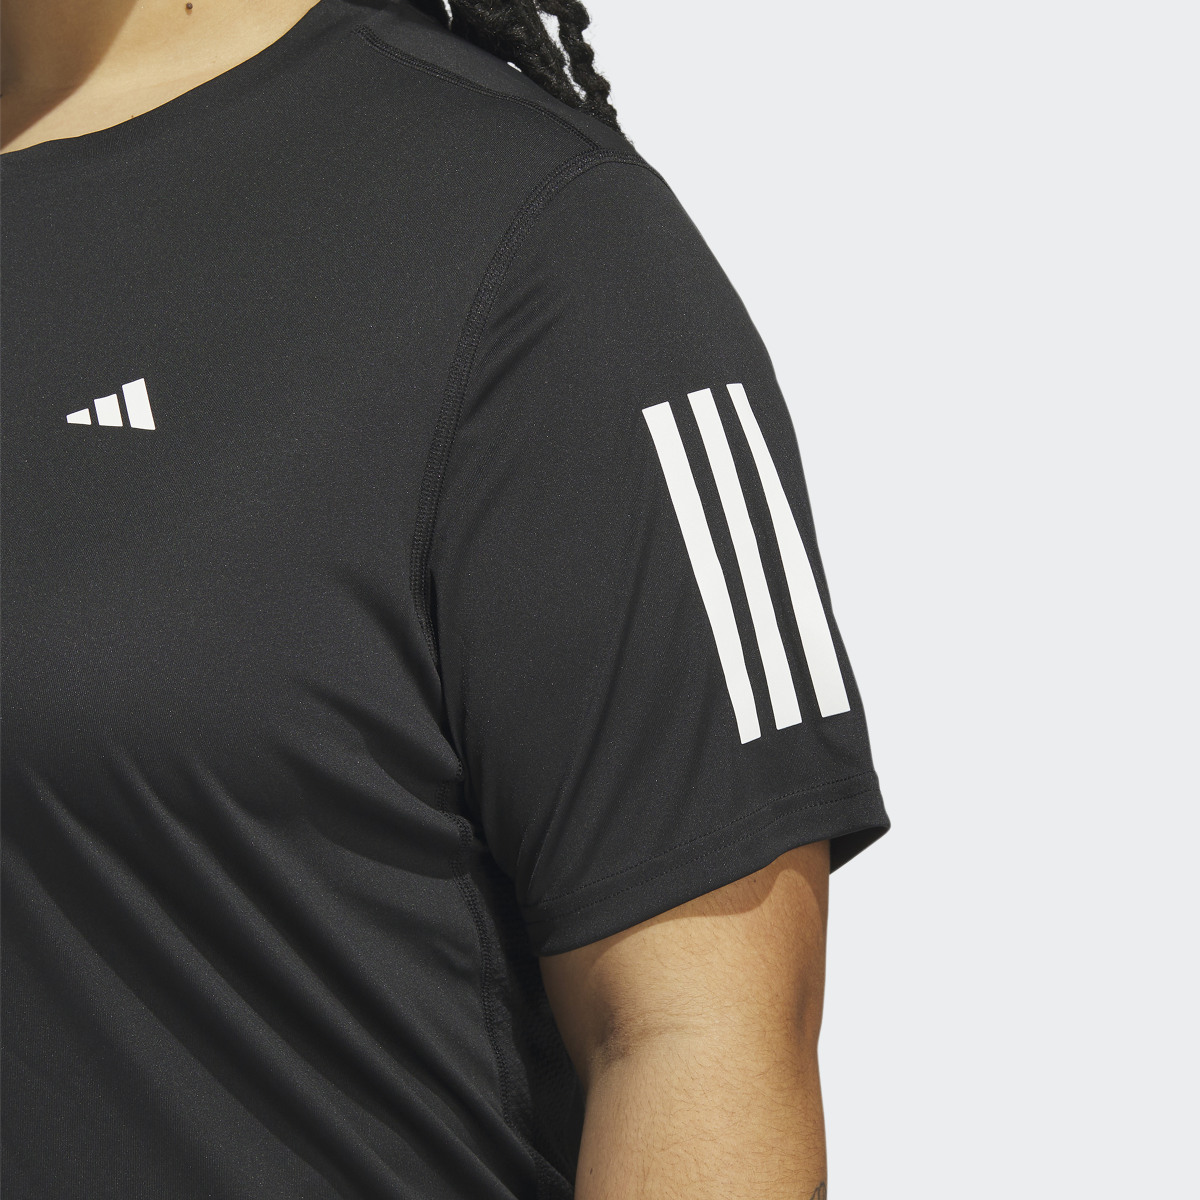 Adidas Own the Run T-Shirt (Plus Size). 6